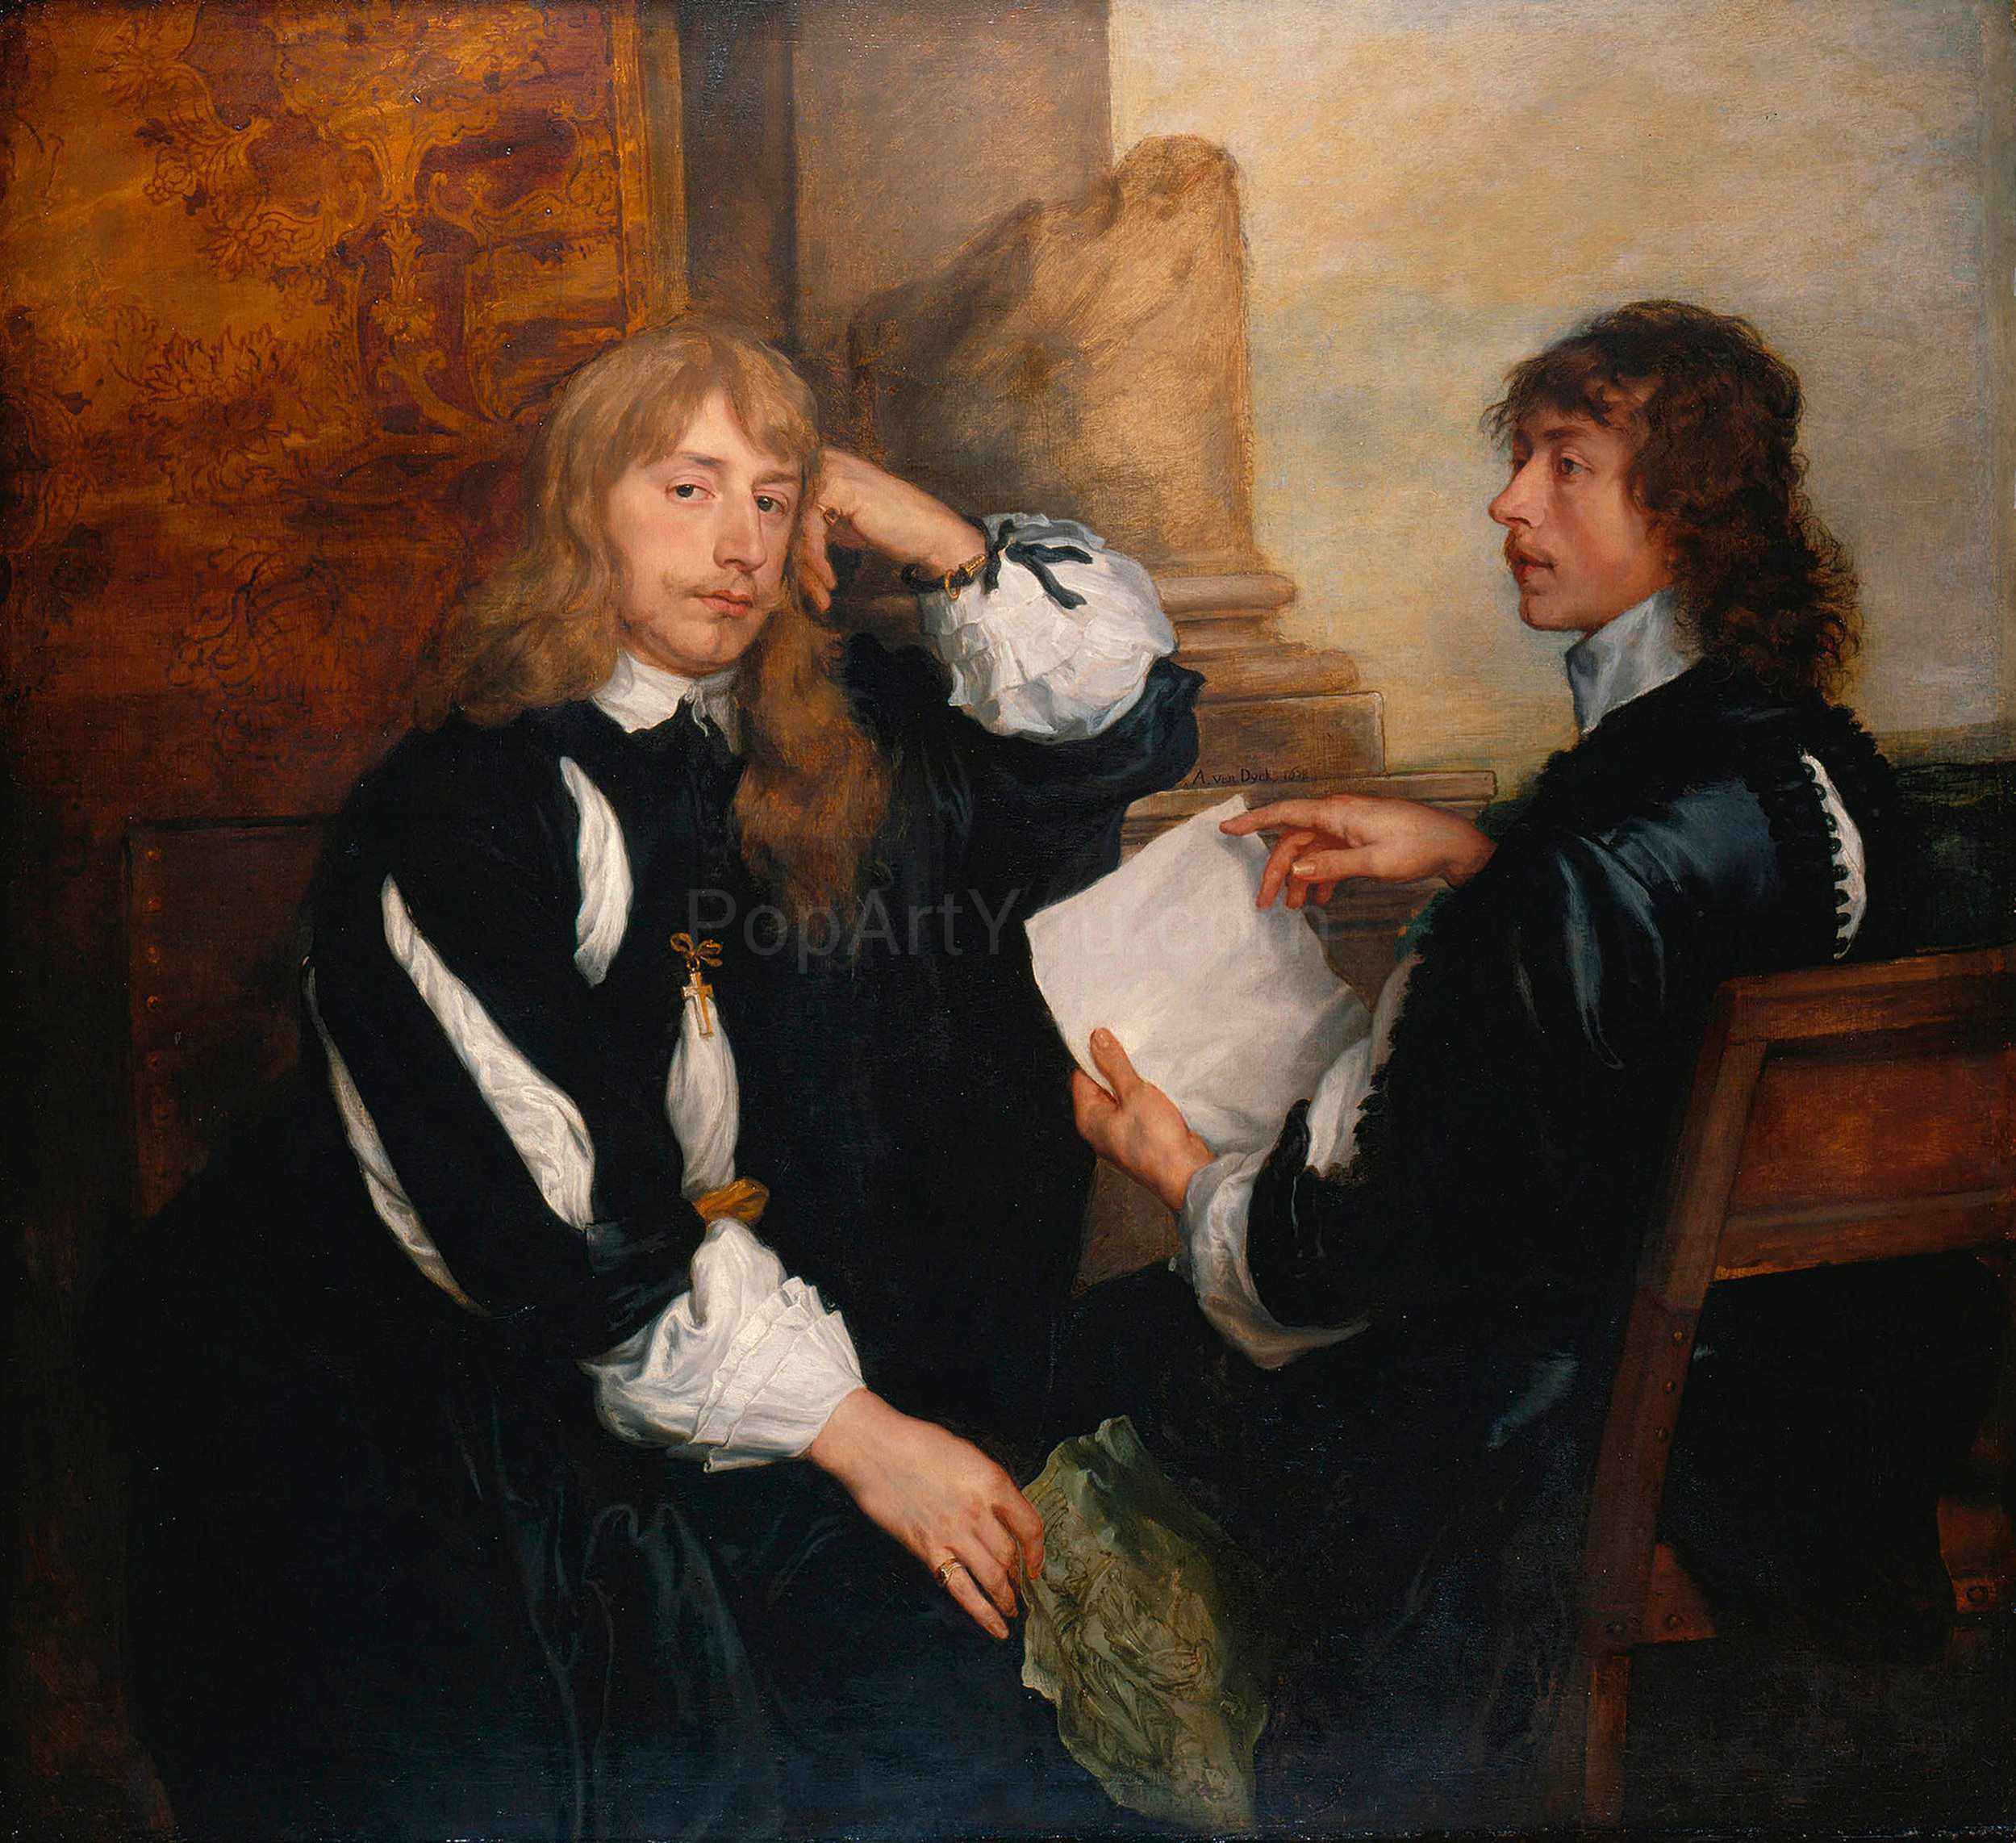 Thomas Killigrew and Lord William group of men portrait